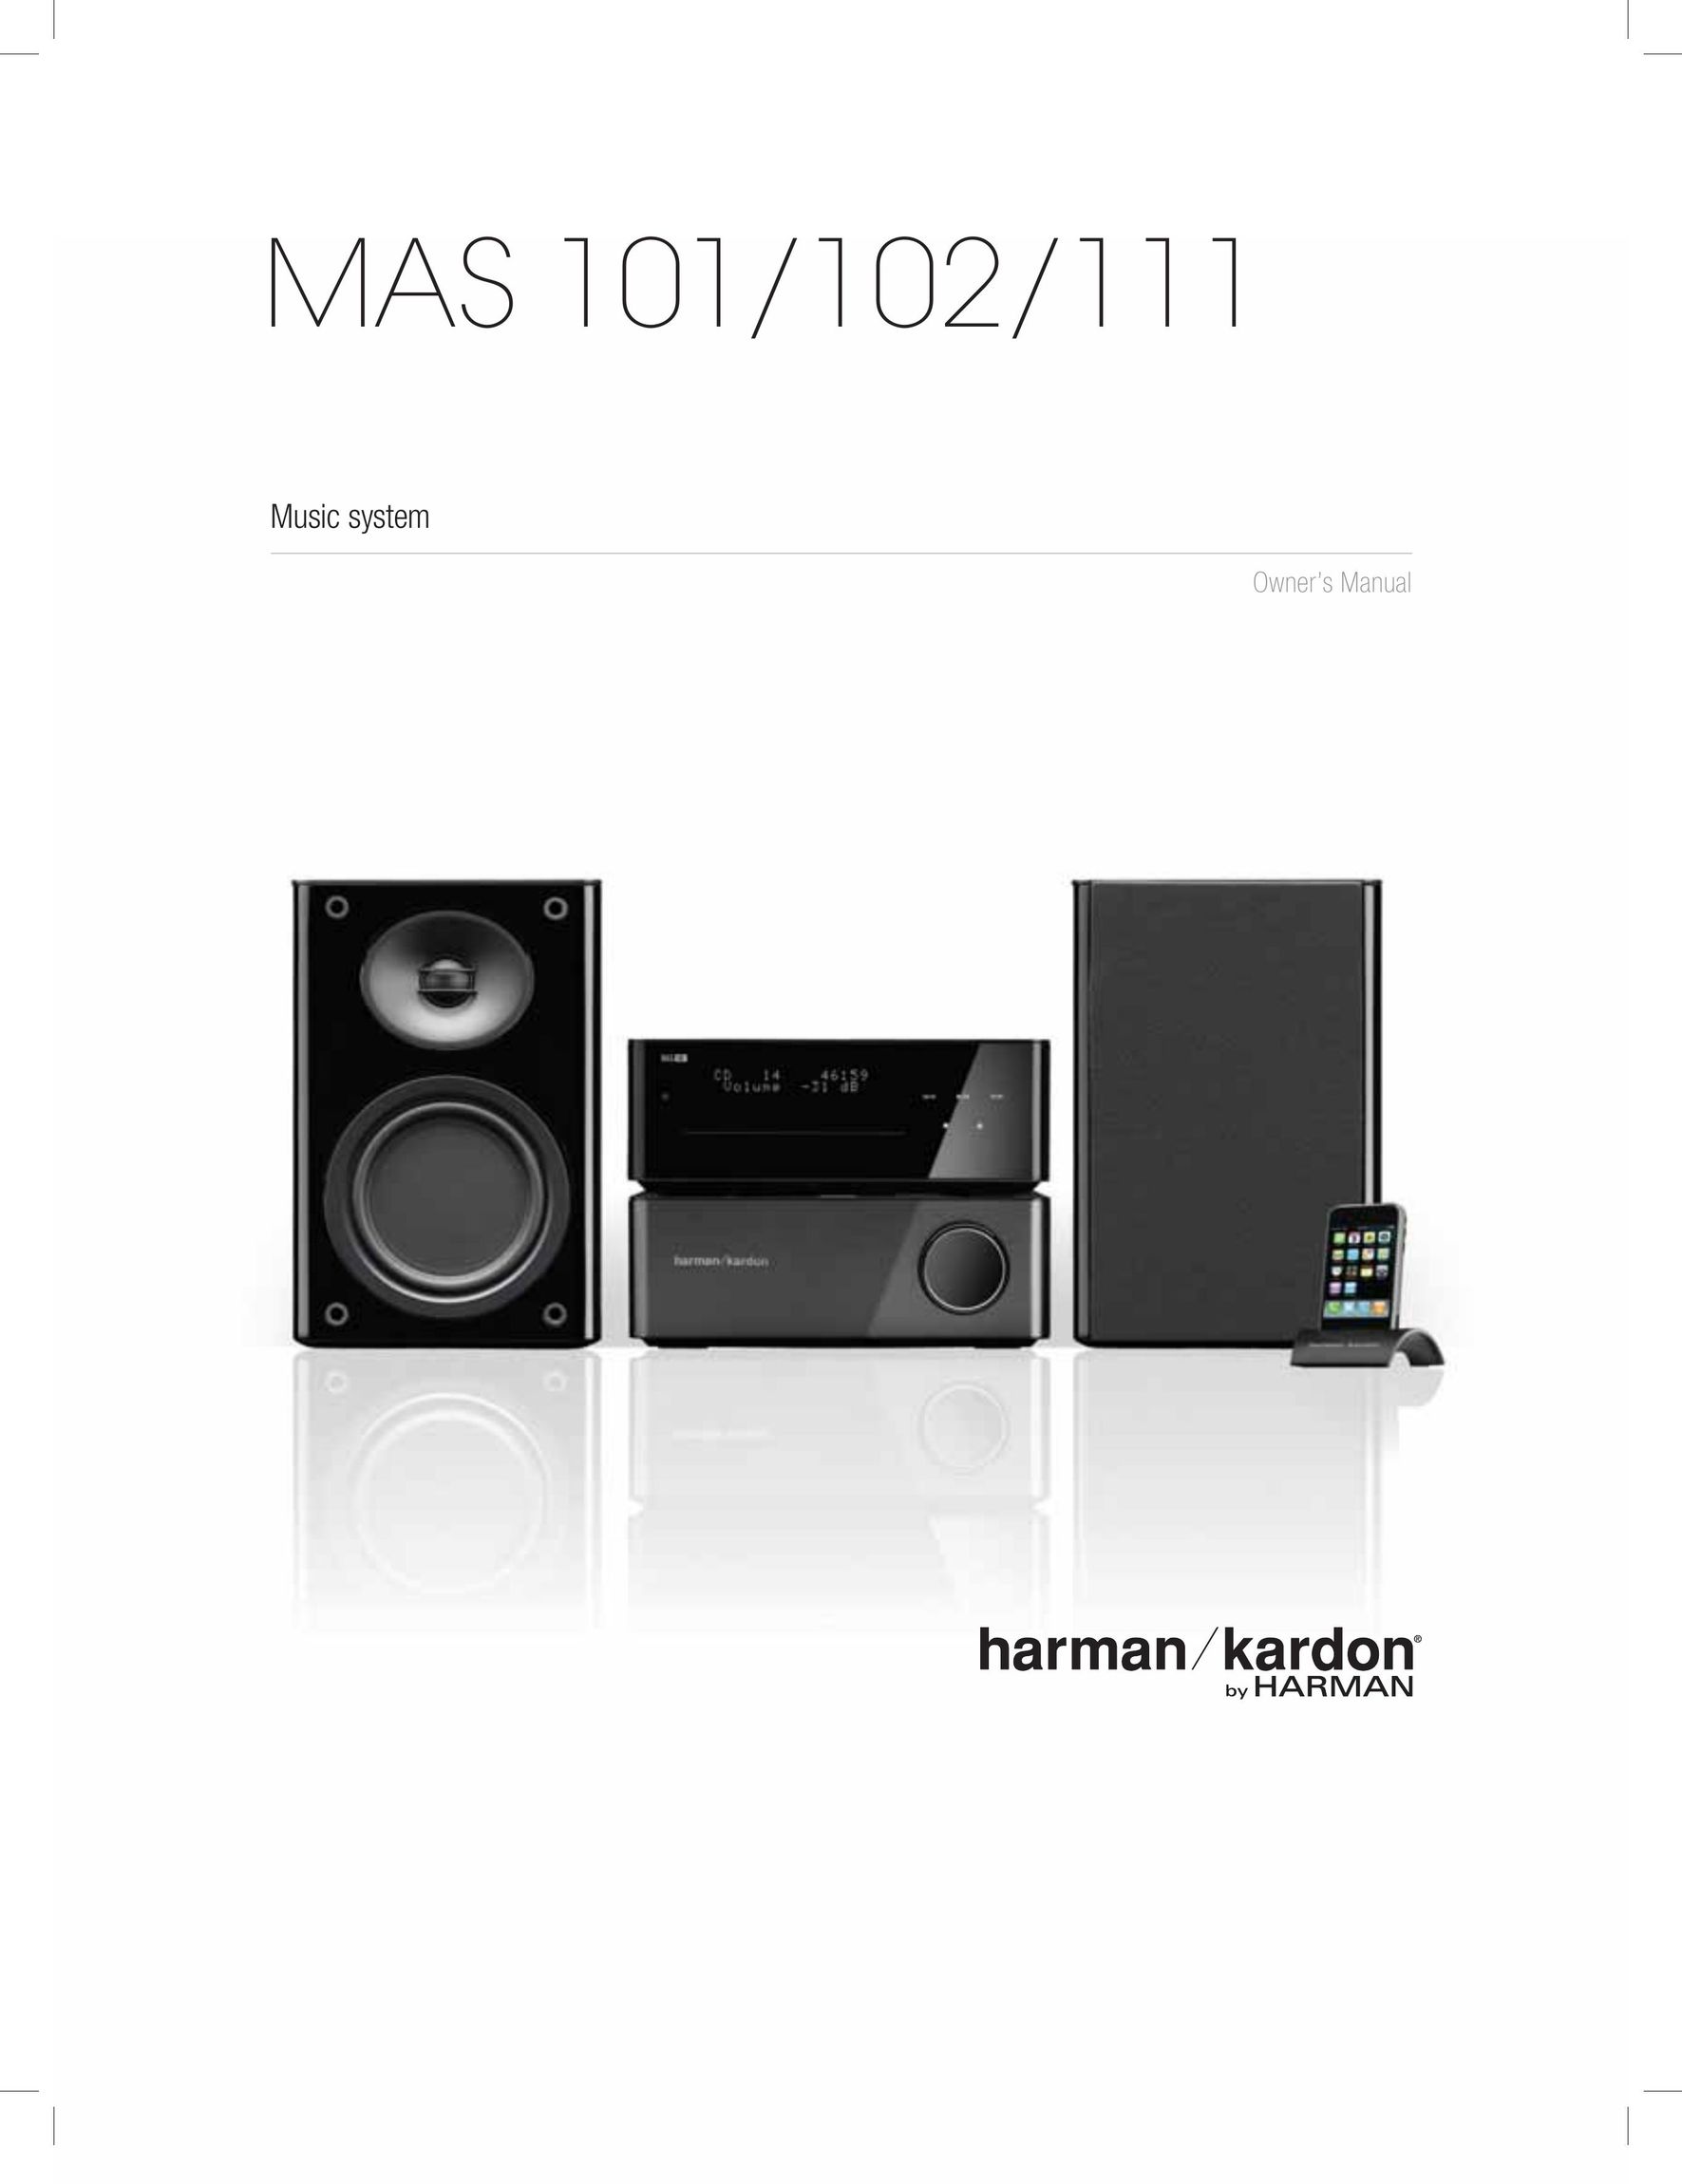 Harman-Kardon MAS 101 Stereo System User Manual